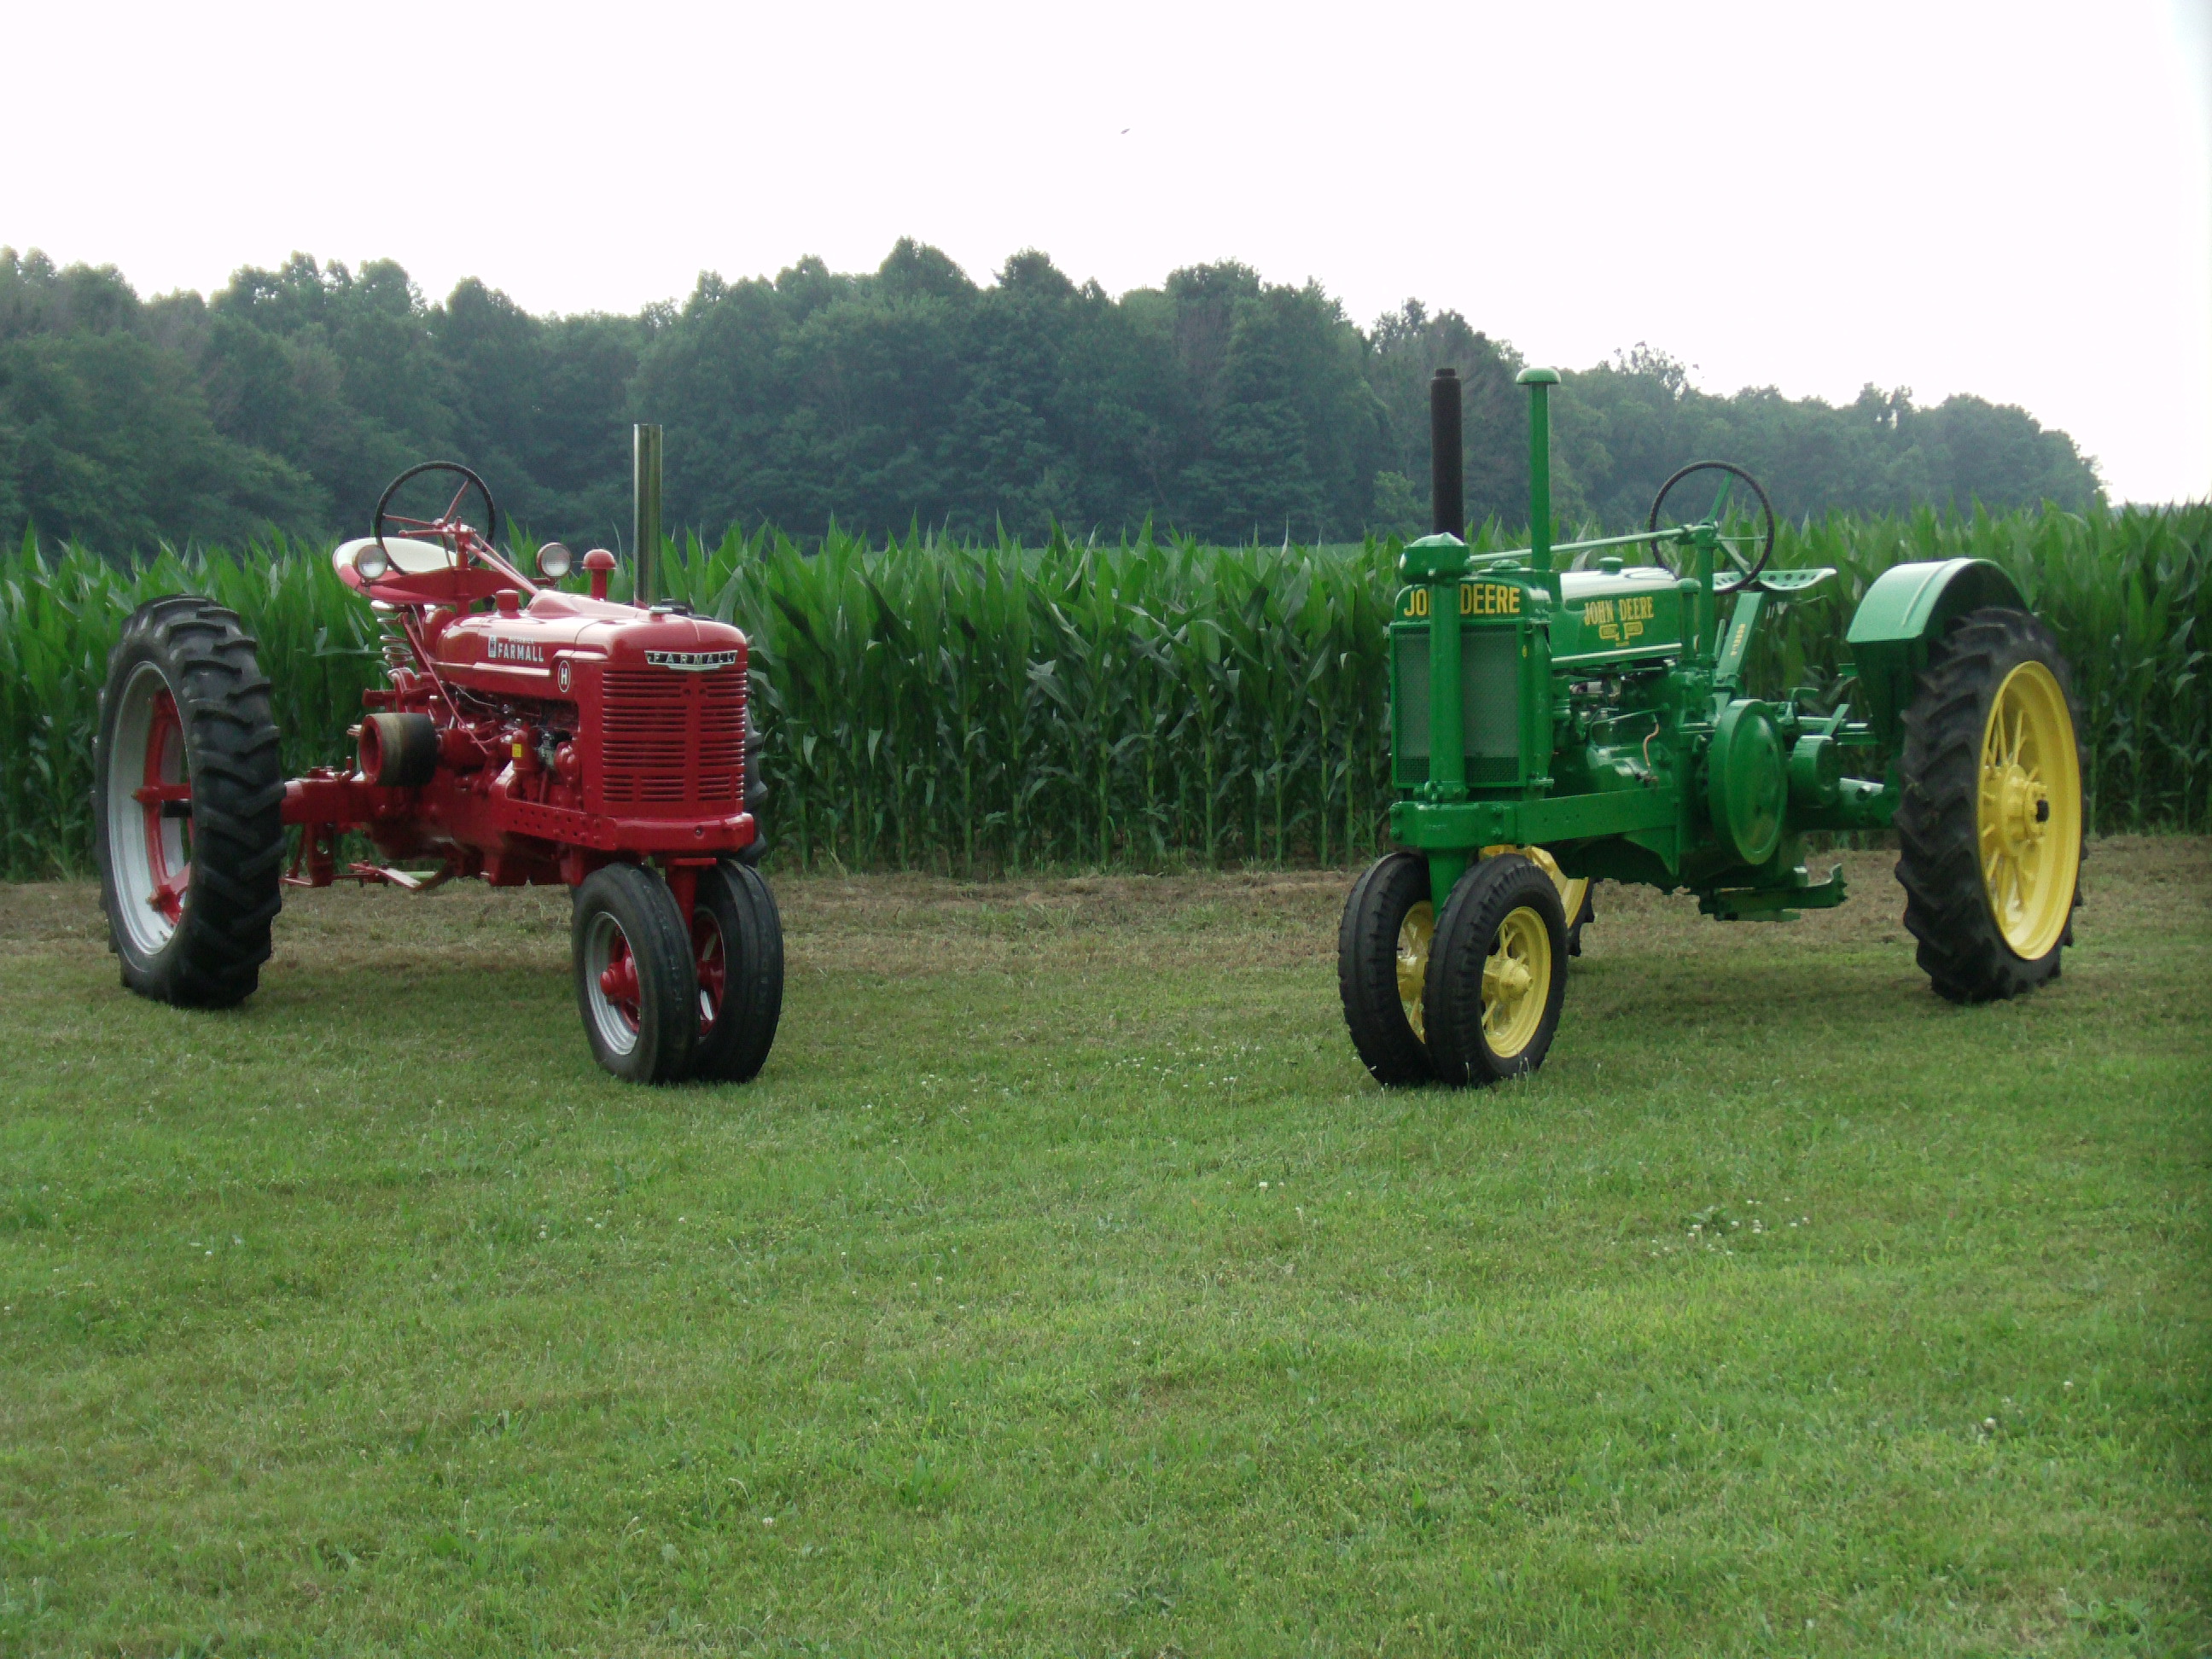 Pair of tractors